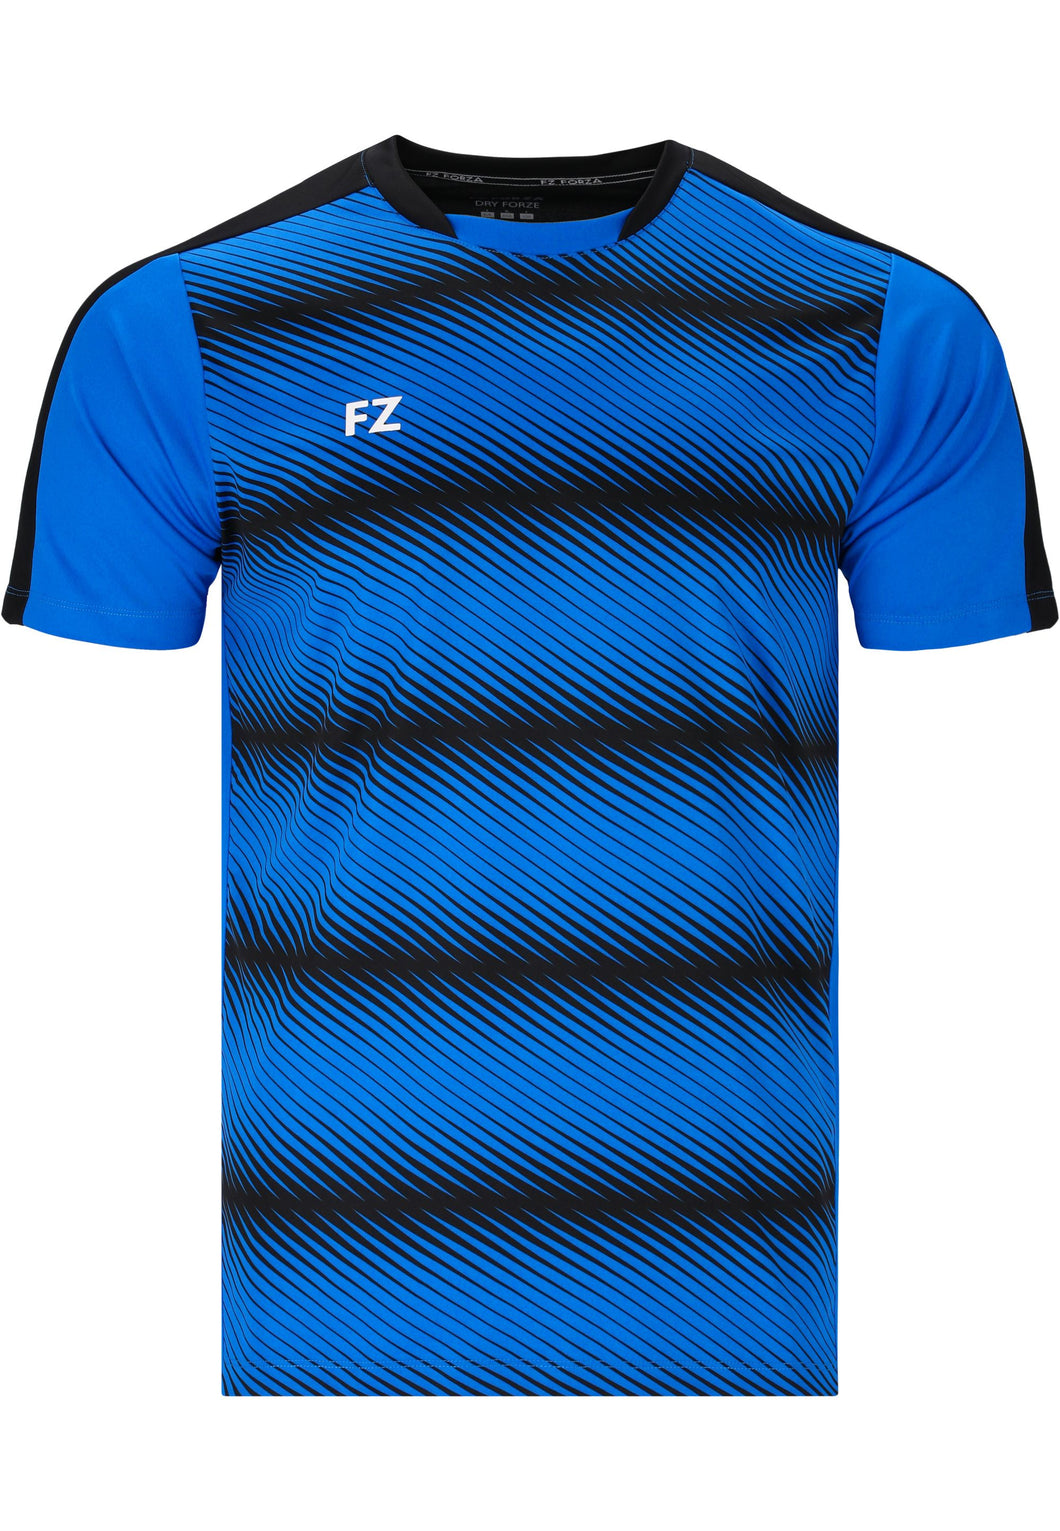 FZ Forza Lothar M S/S T-Shirt 2078 Electric Blue